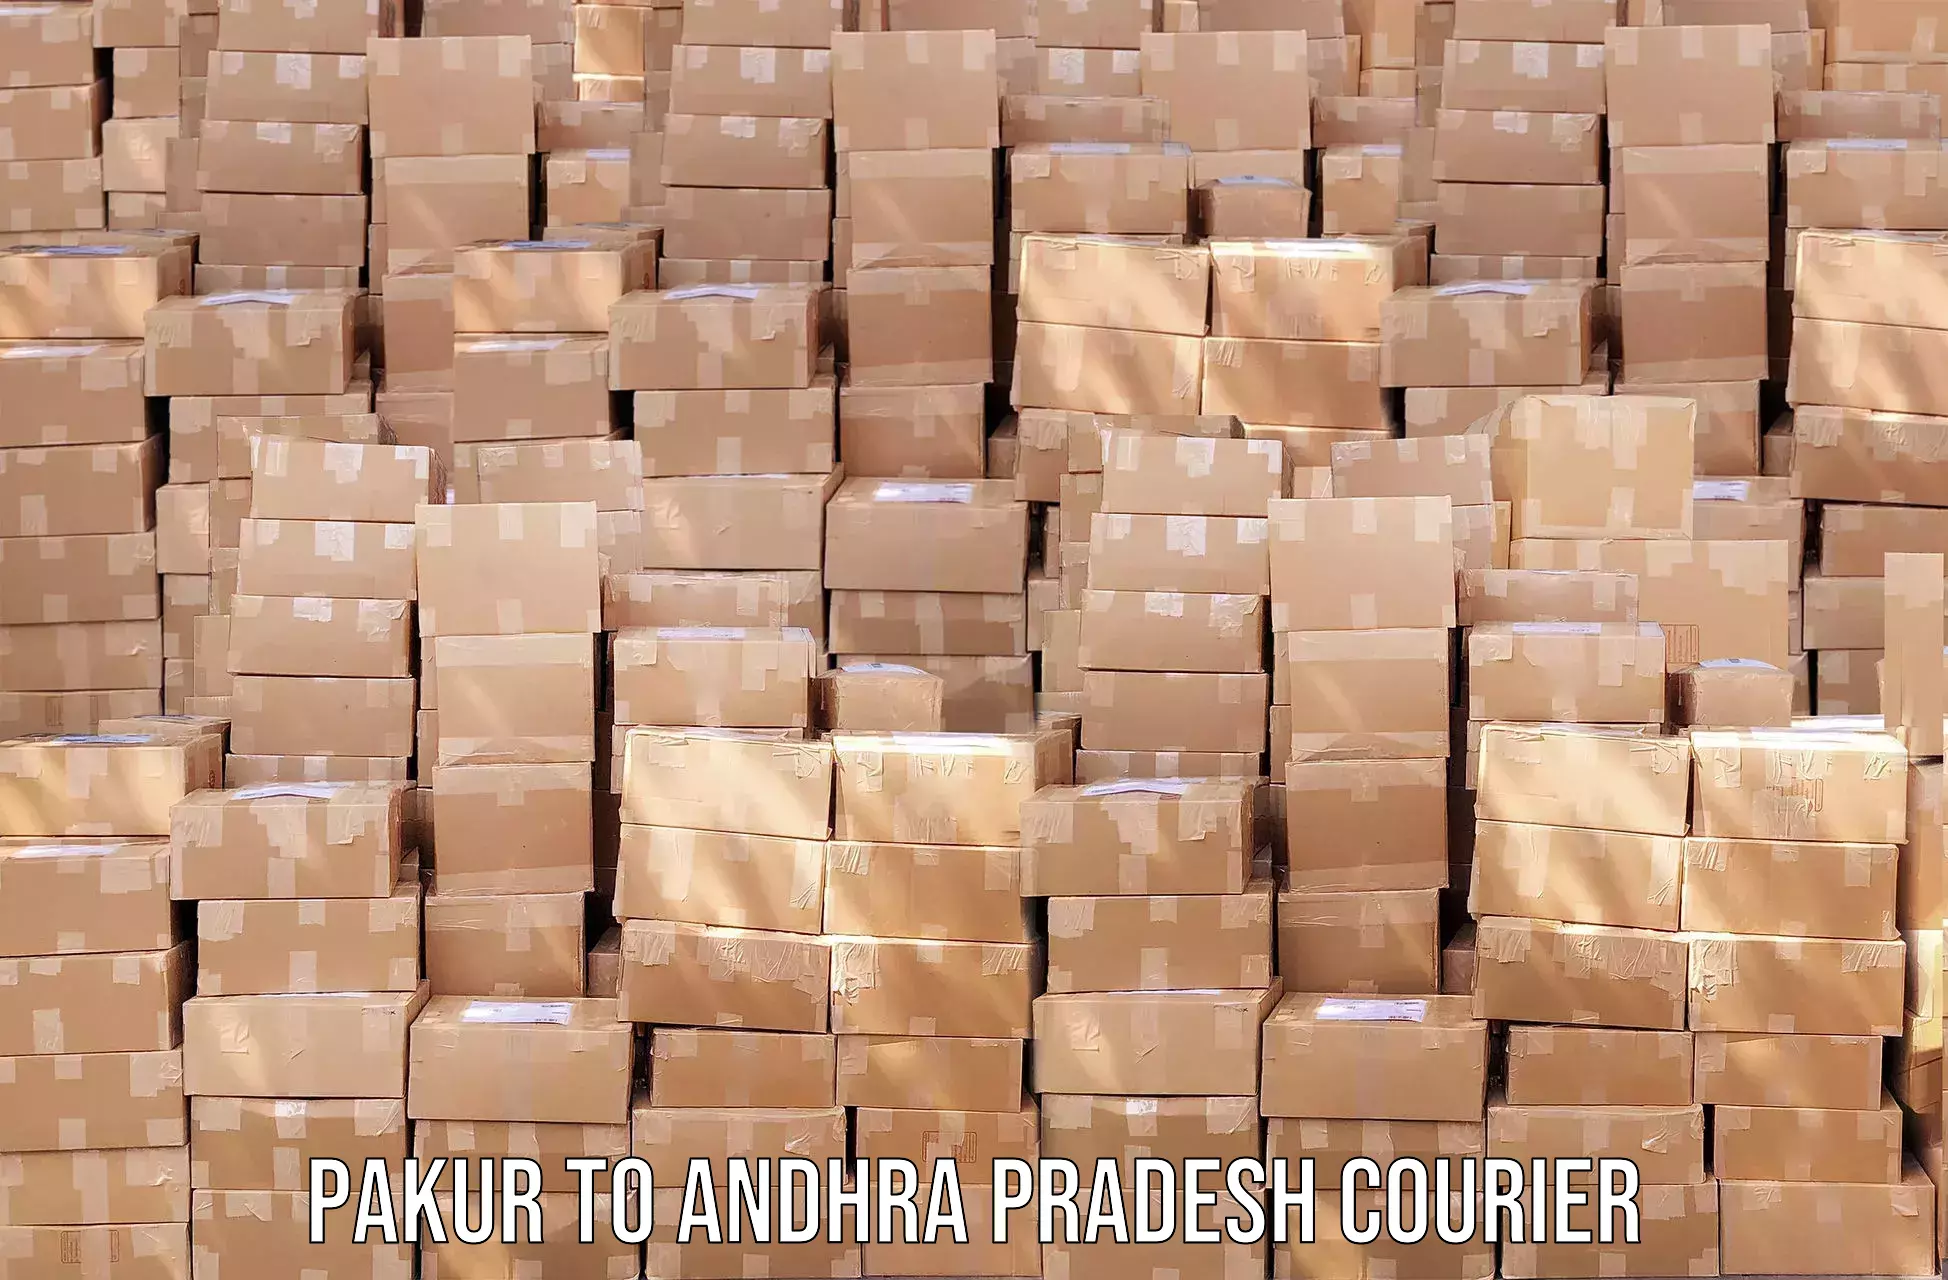 Pharmaceutical courier Pakur to Nandyal